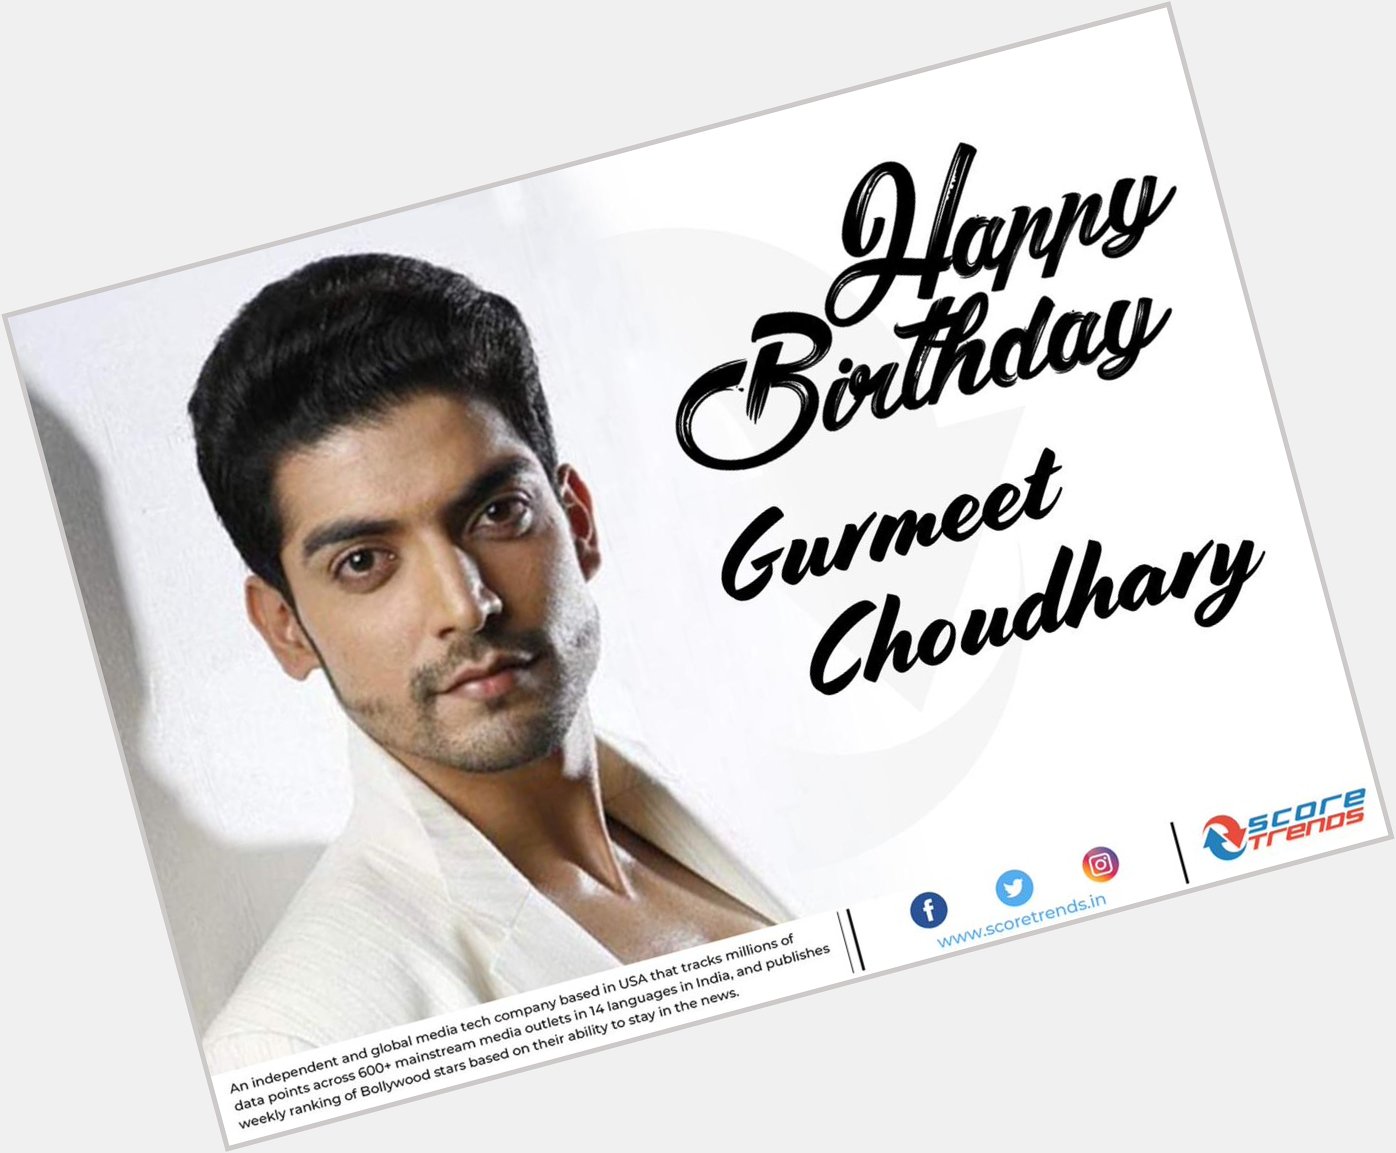 Score Trends wishes Gurmeet Choudhary a Happy Birthday!! 